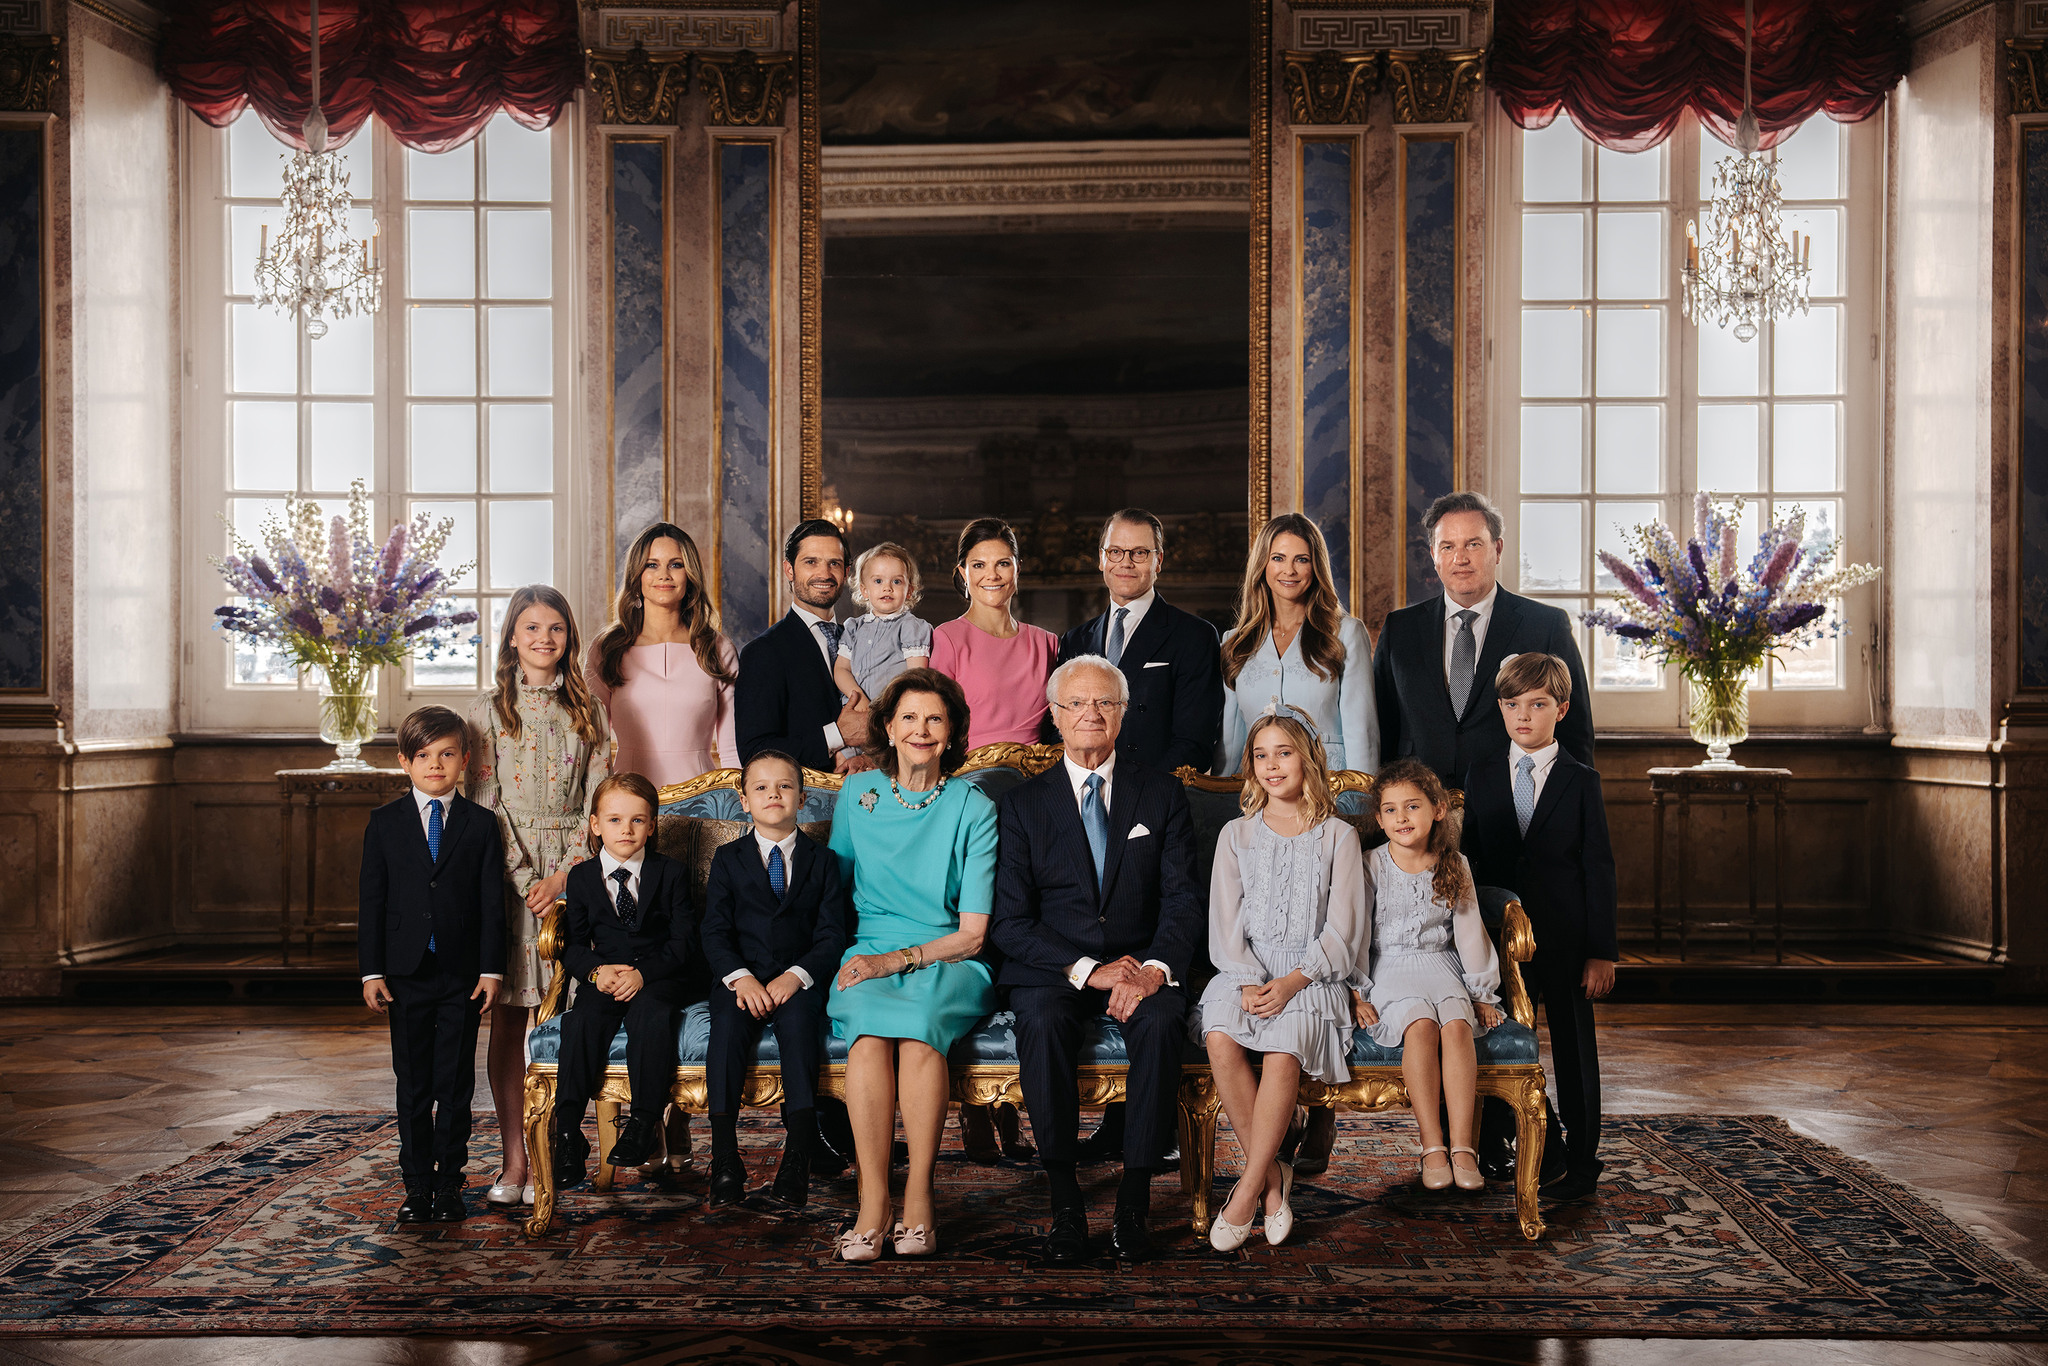 The Swedish royal family